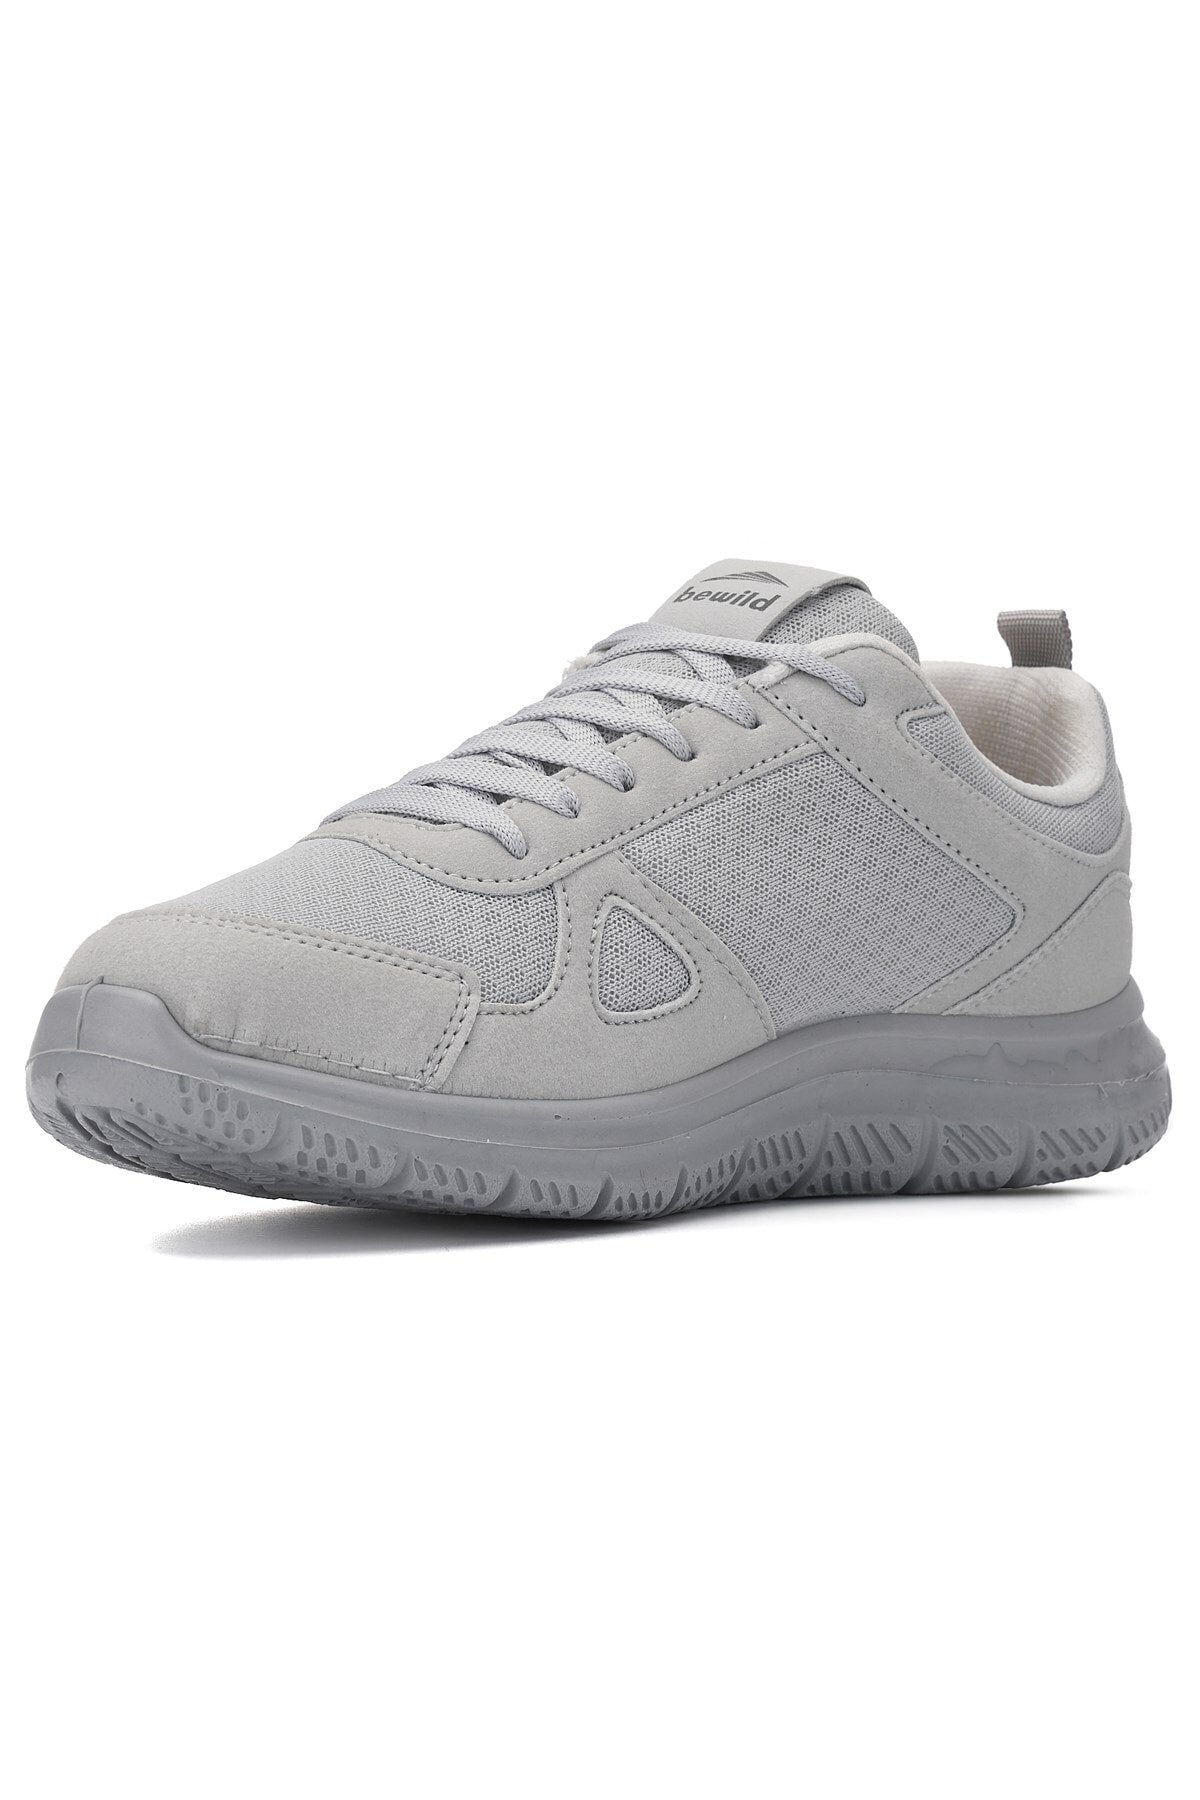 Daily Men's Sneaker Sport Shoes Laccked Flexible Comfort Walking Running Run 40131